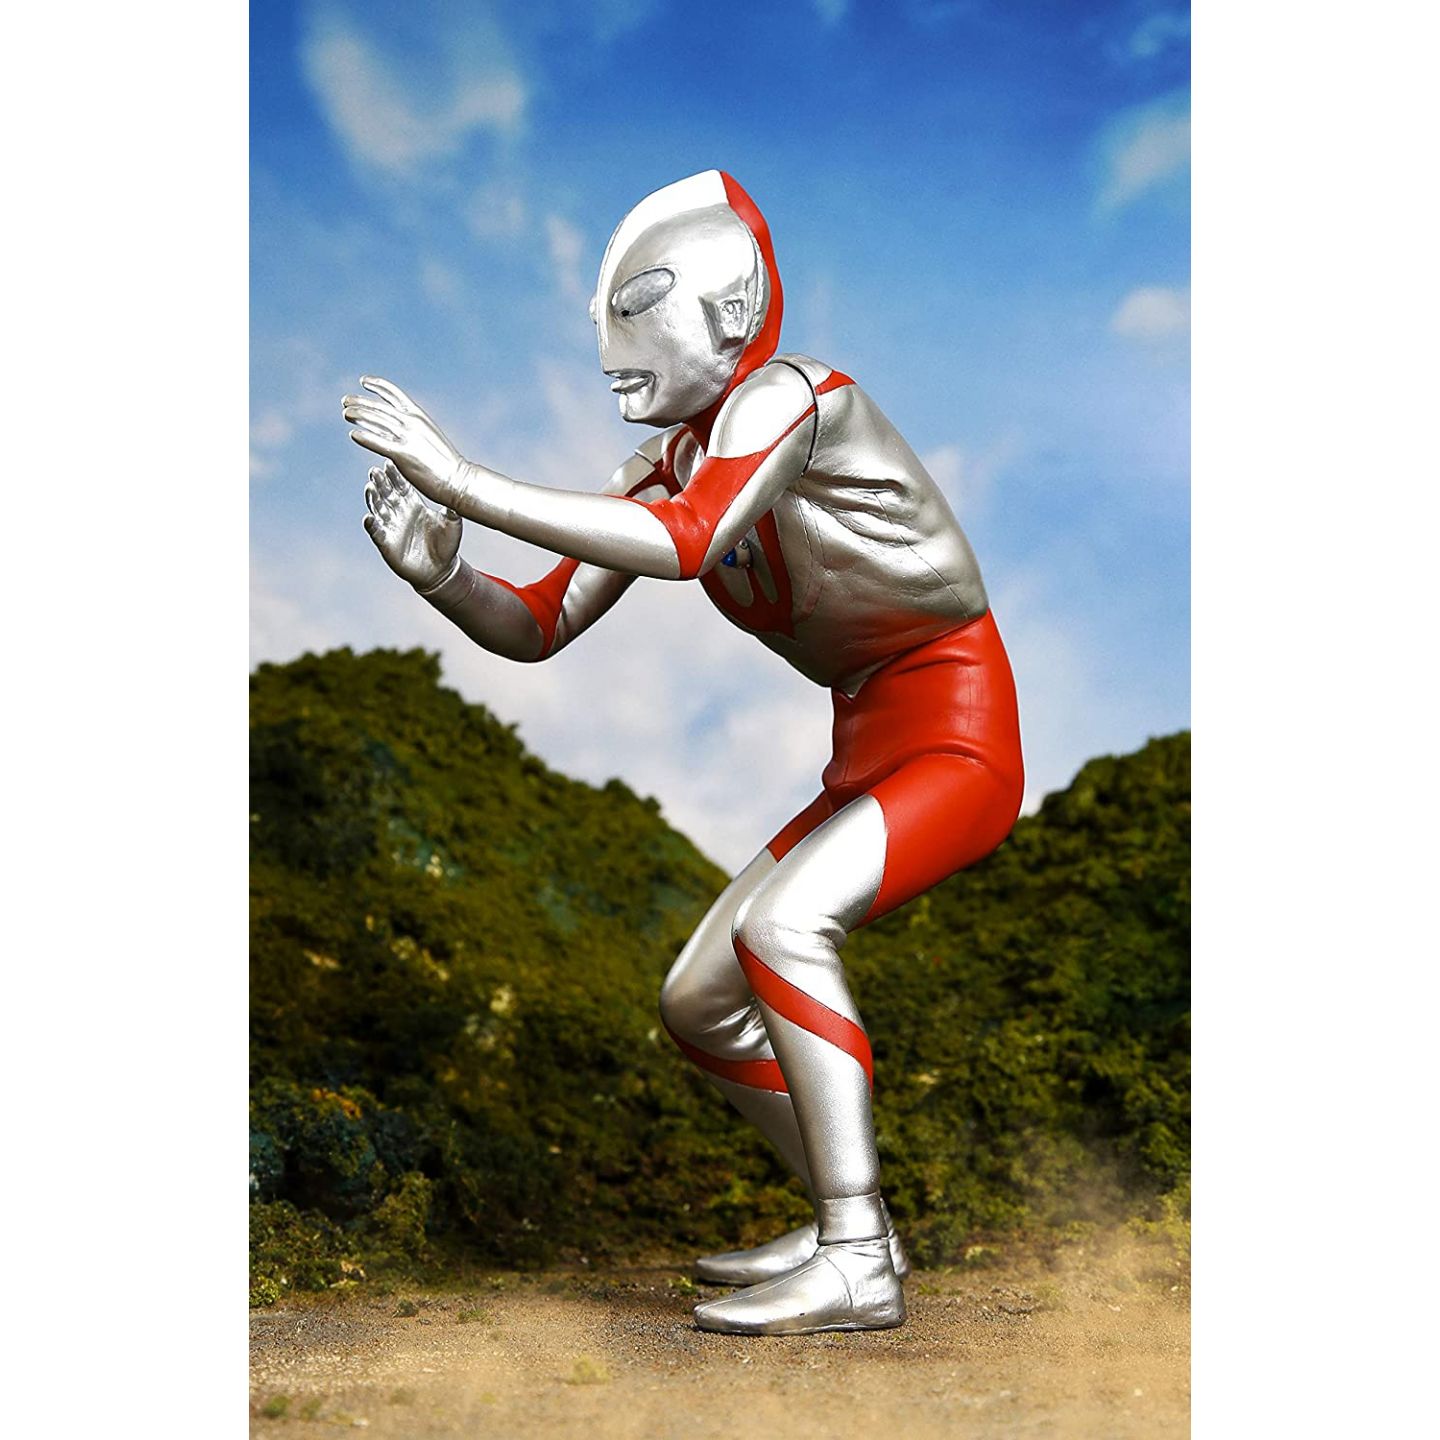 Ultraman Jack Specium Kousen pose by Mashowaforededwa on DeviantArt